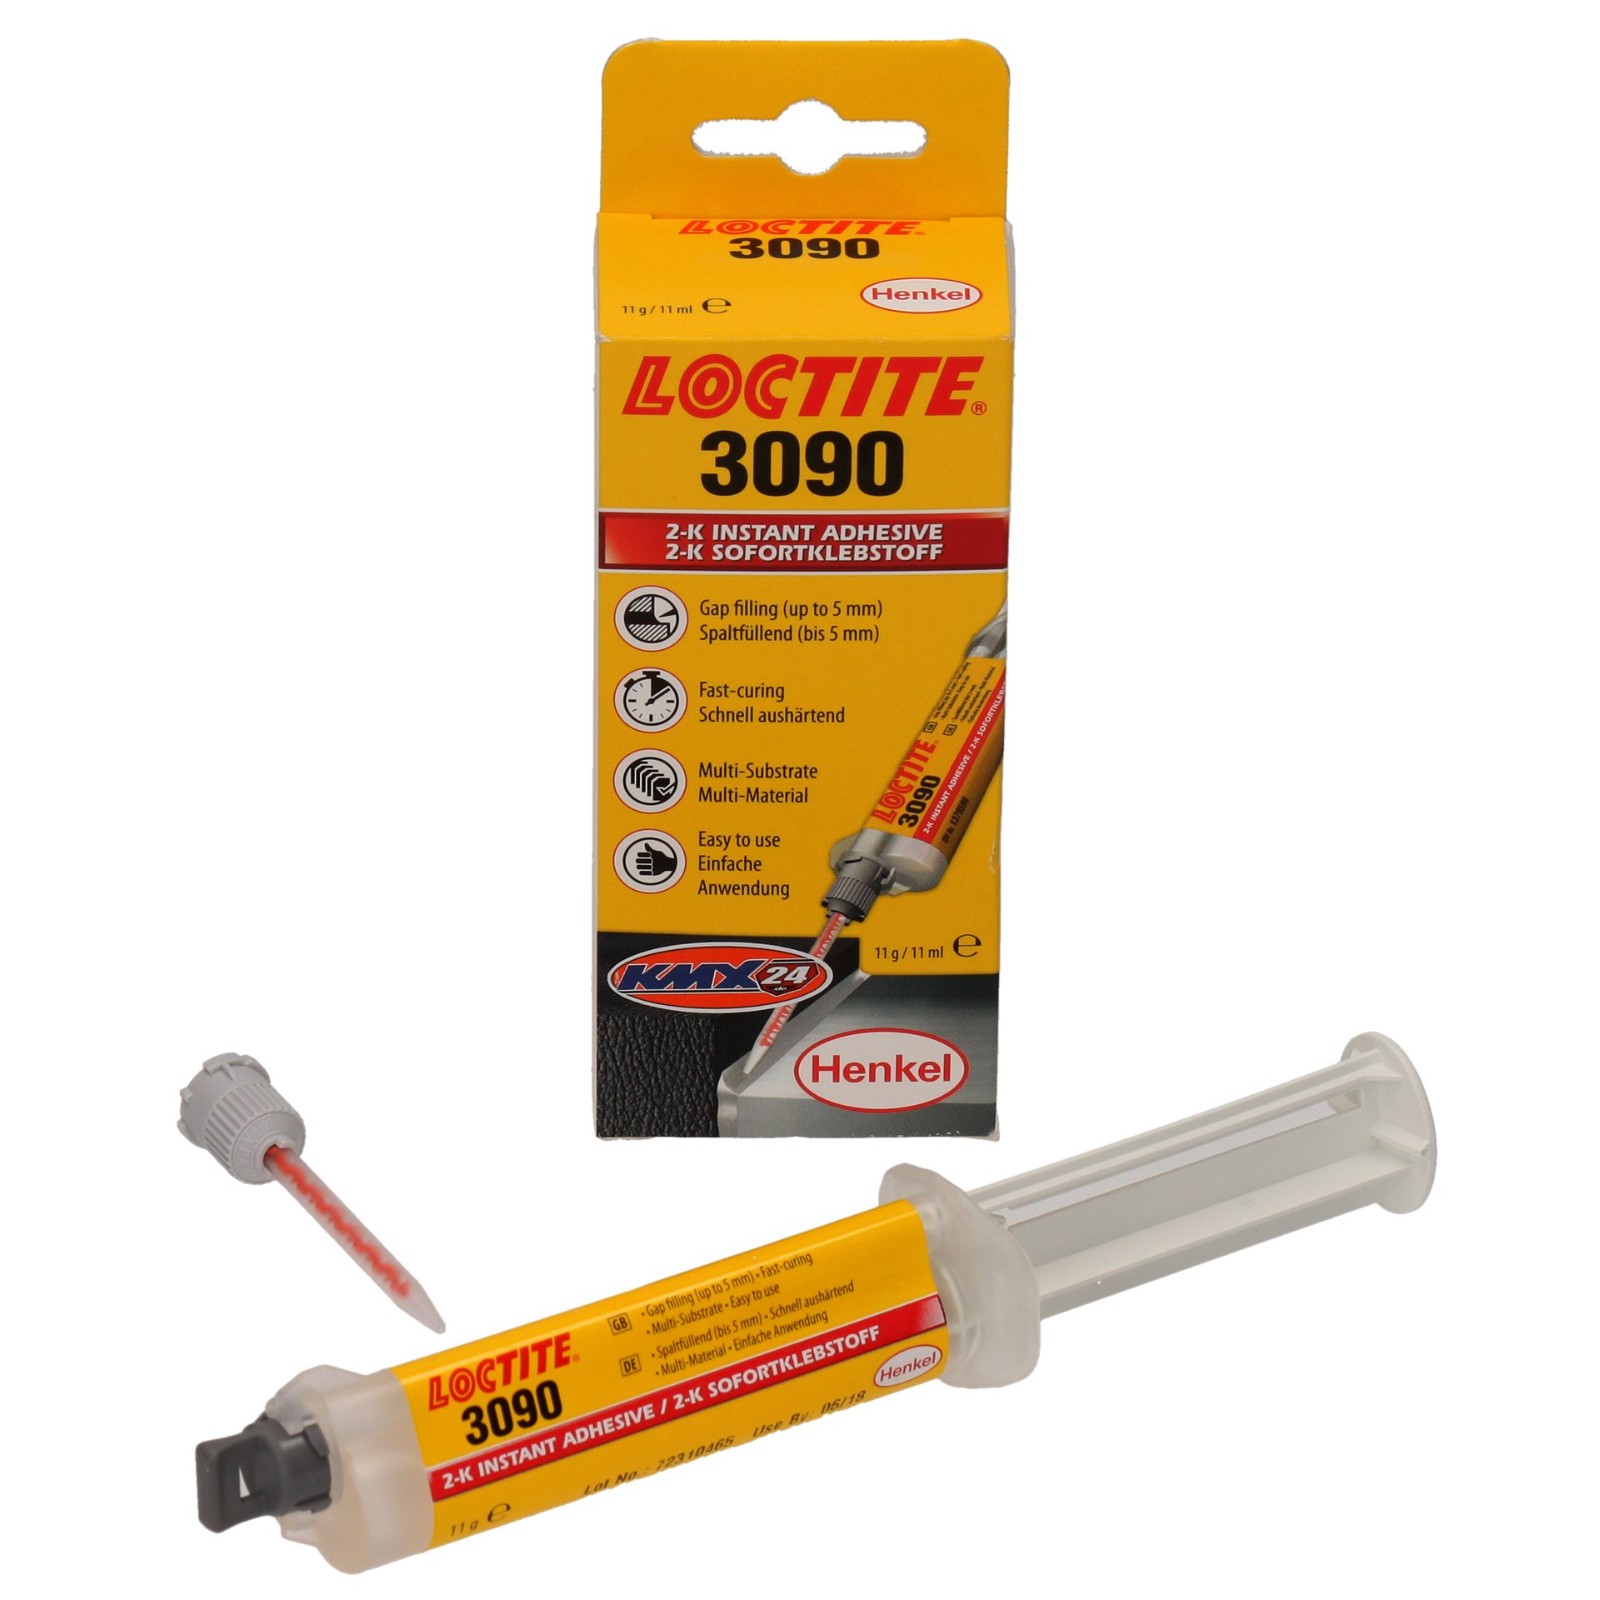 LOCTITE 3090 - Sofortklebstoff - Henkel Adhesives